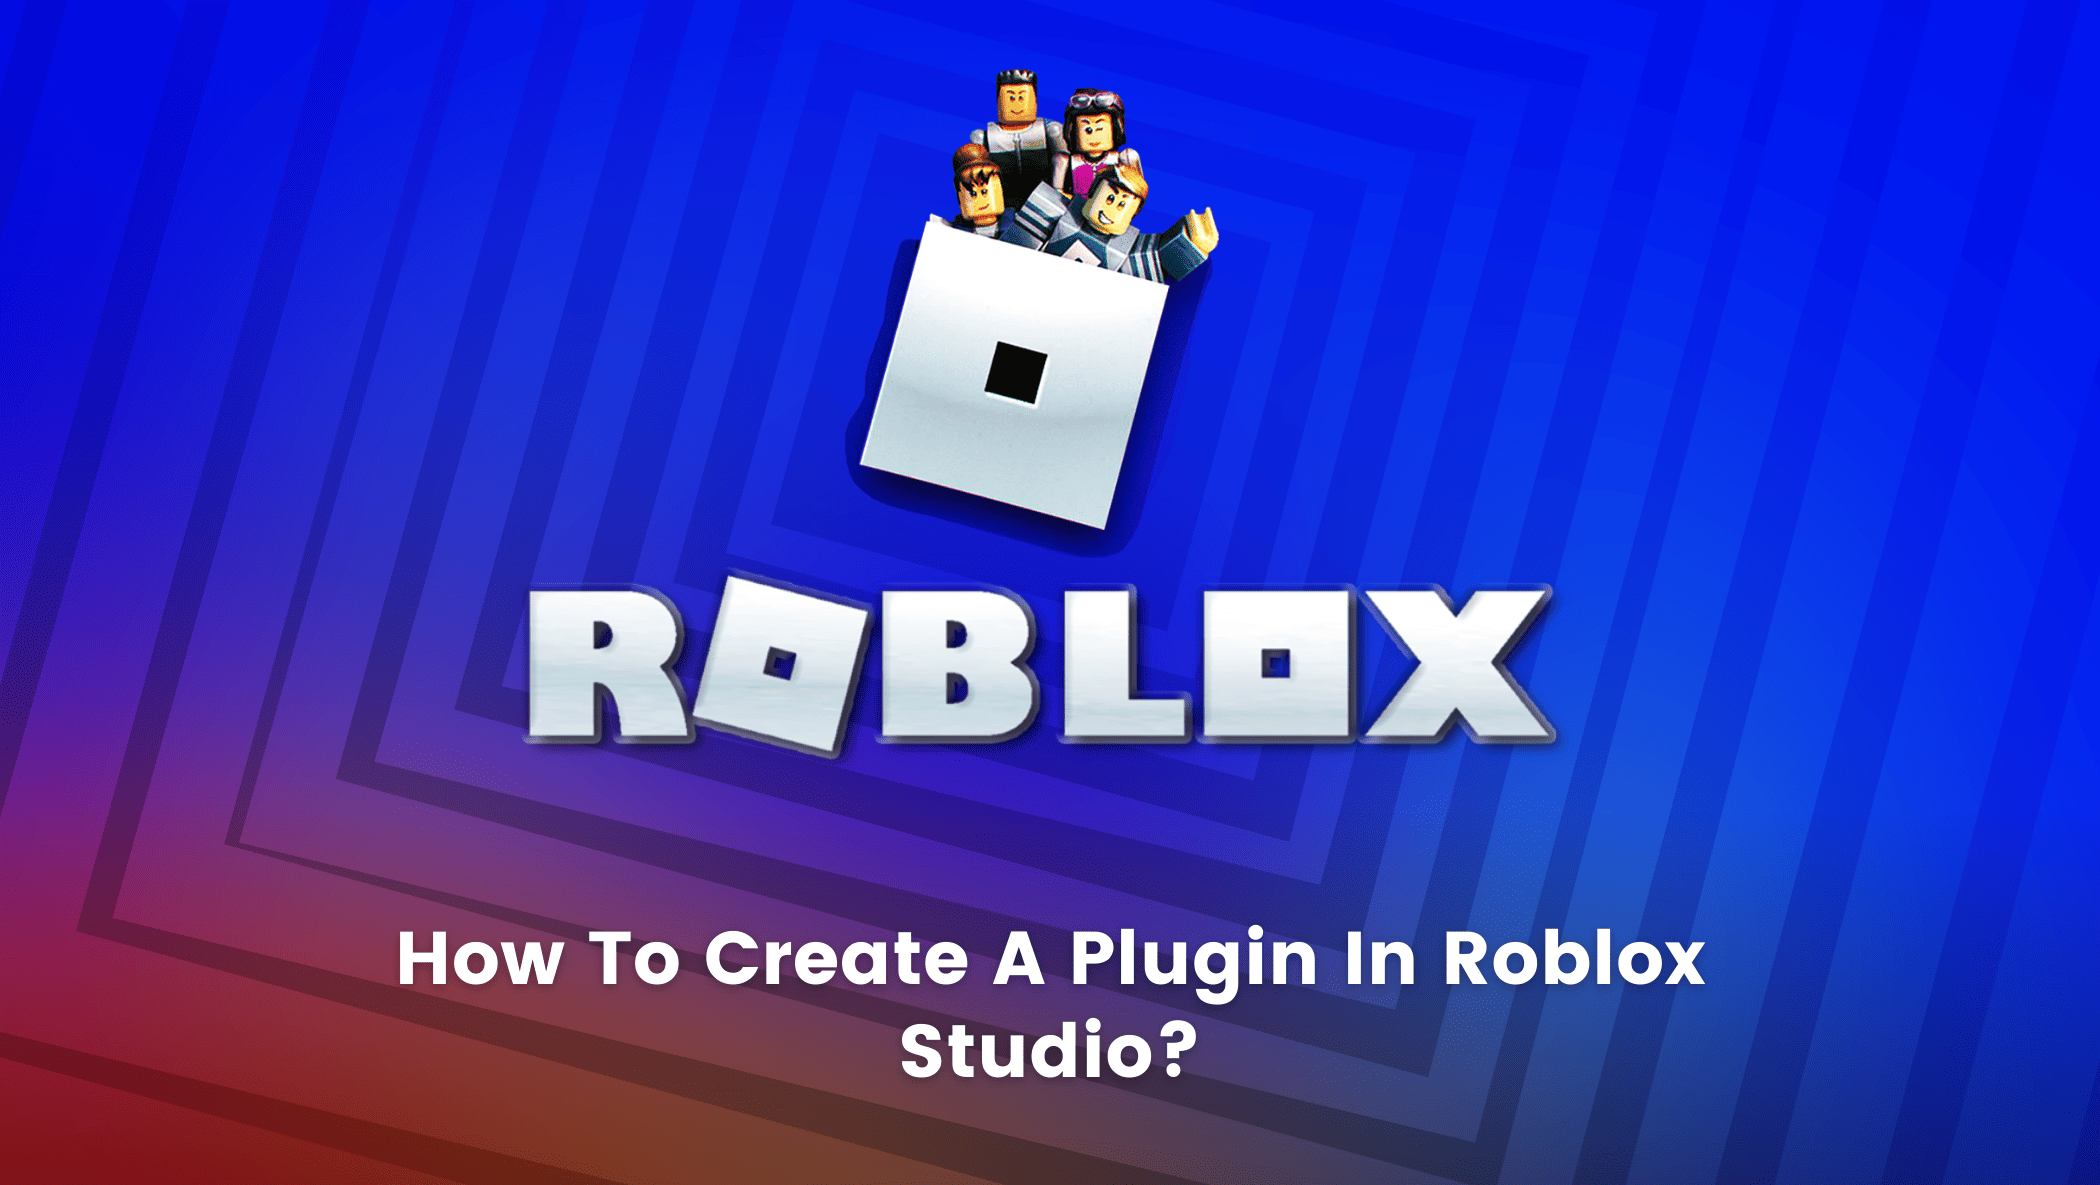 Roblox Studio Publish GUI Not Working - Platform Usage Support